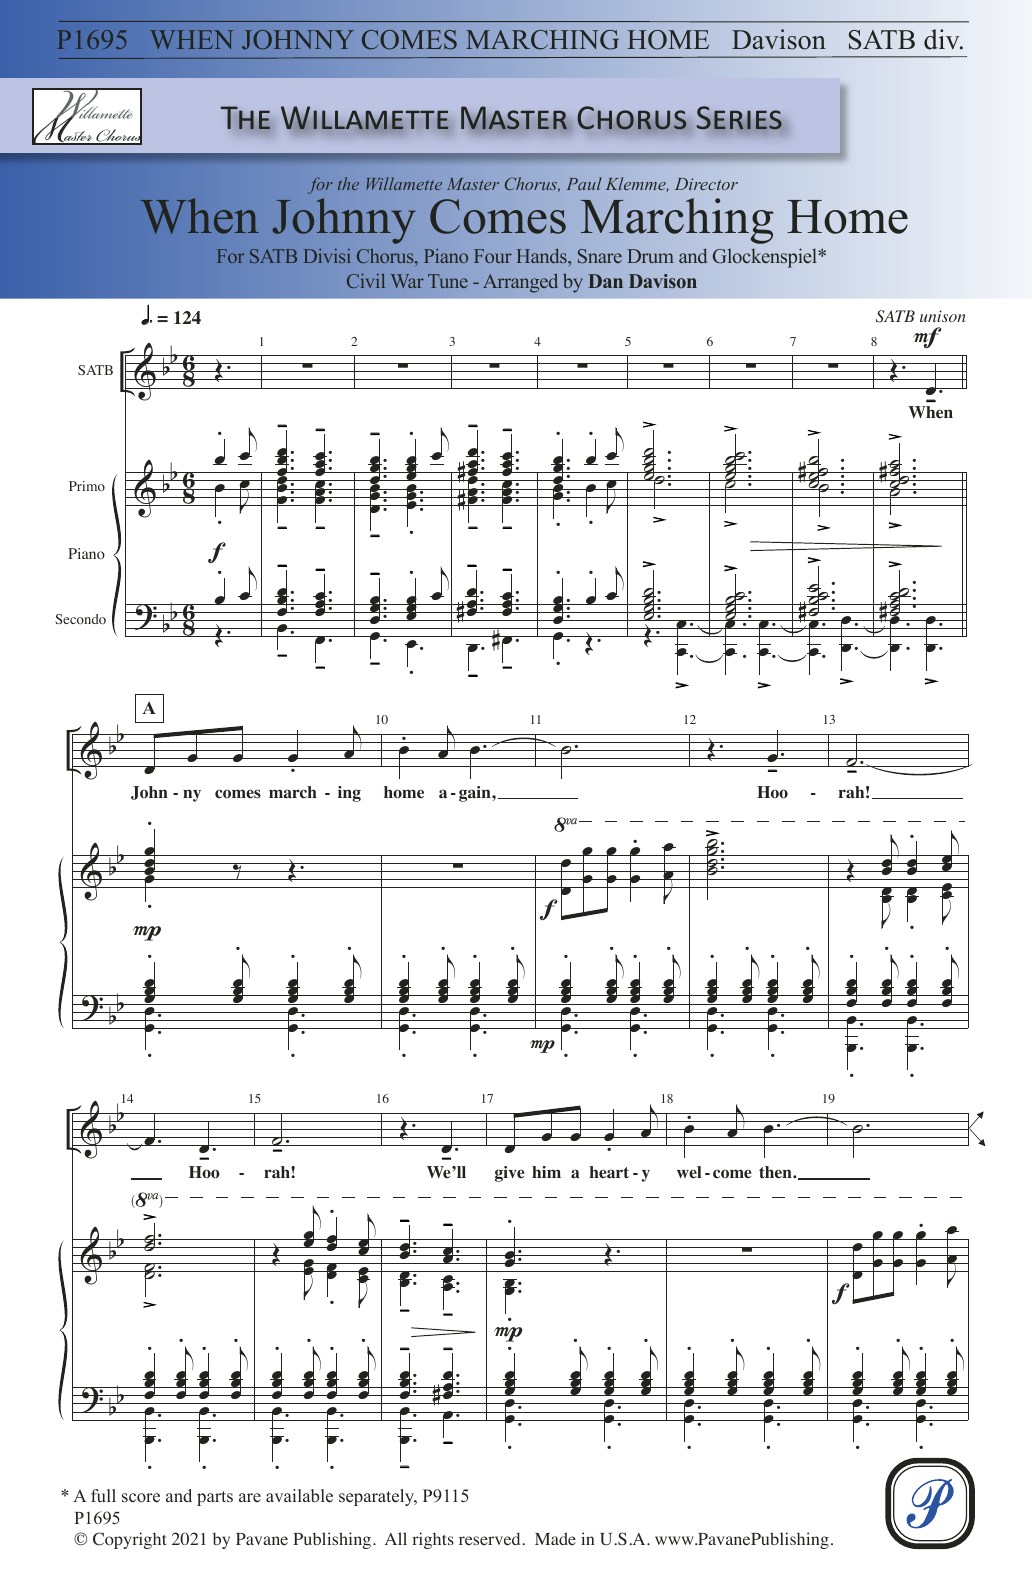 Civil War Tune When Johnny Comes Marching Home (arr. Dan Davison) Sheet Music Notes & Chords for SATB Choir - Download or Print PDF